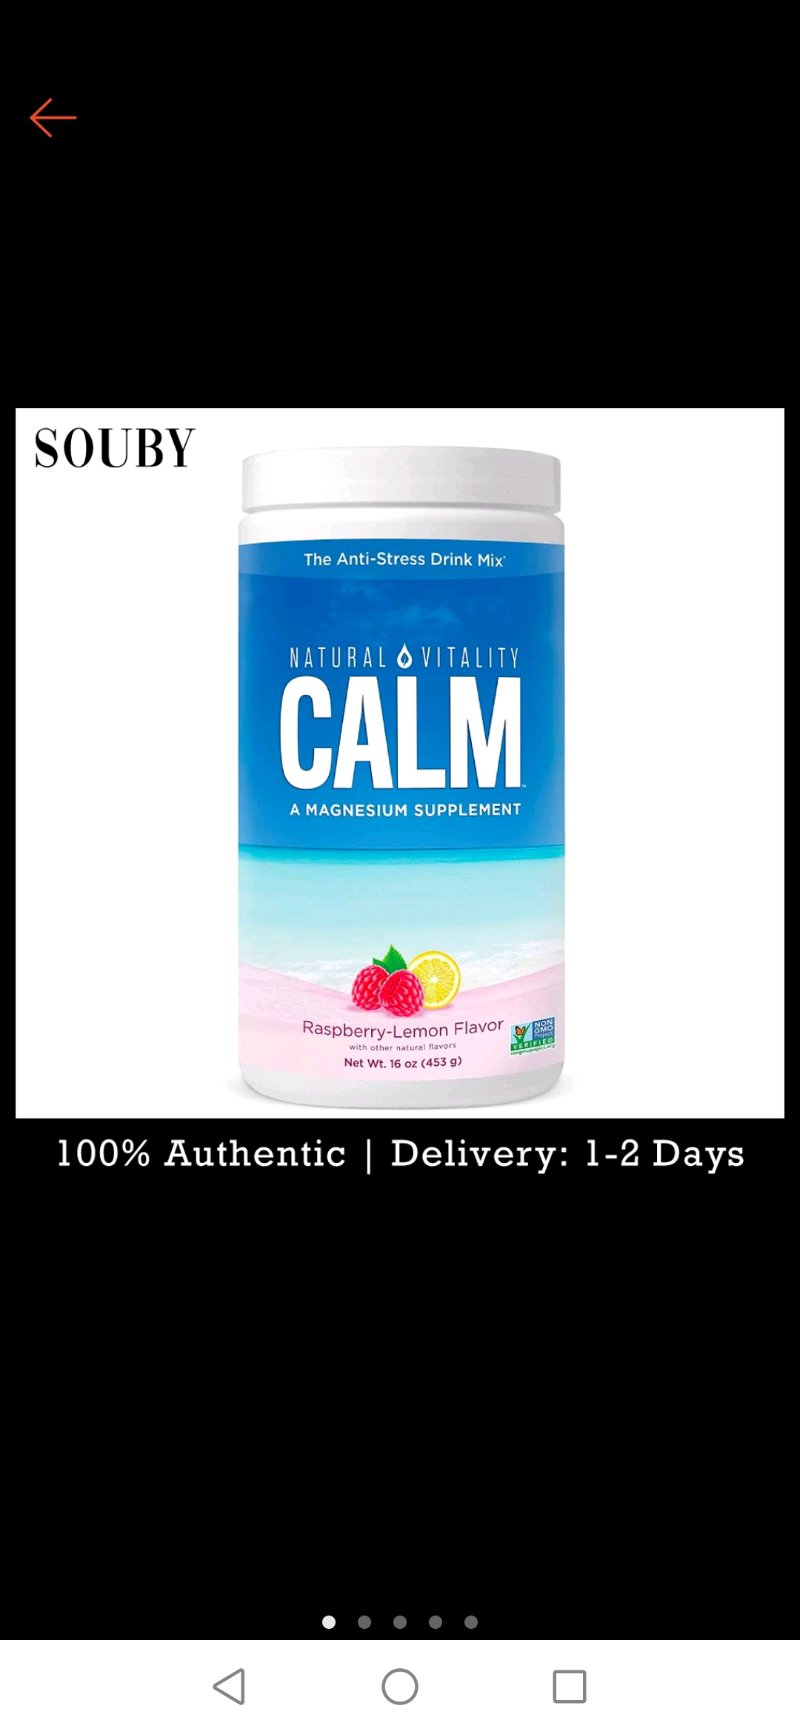 Natural Vitality Calm Magnesium Citrate Supplement , Anti-Stress Drink Mix  Powder - Raspberry Lemon Flavour - 453g | Shopee Singapore